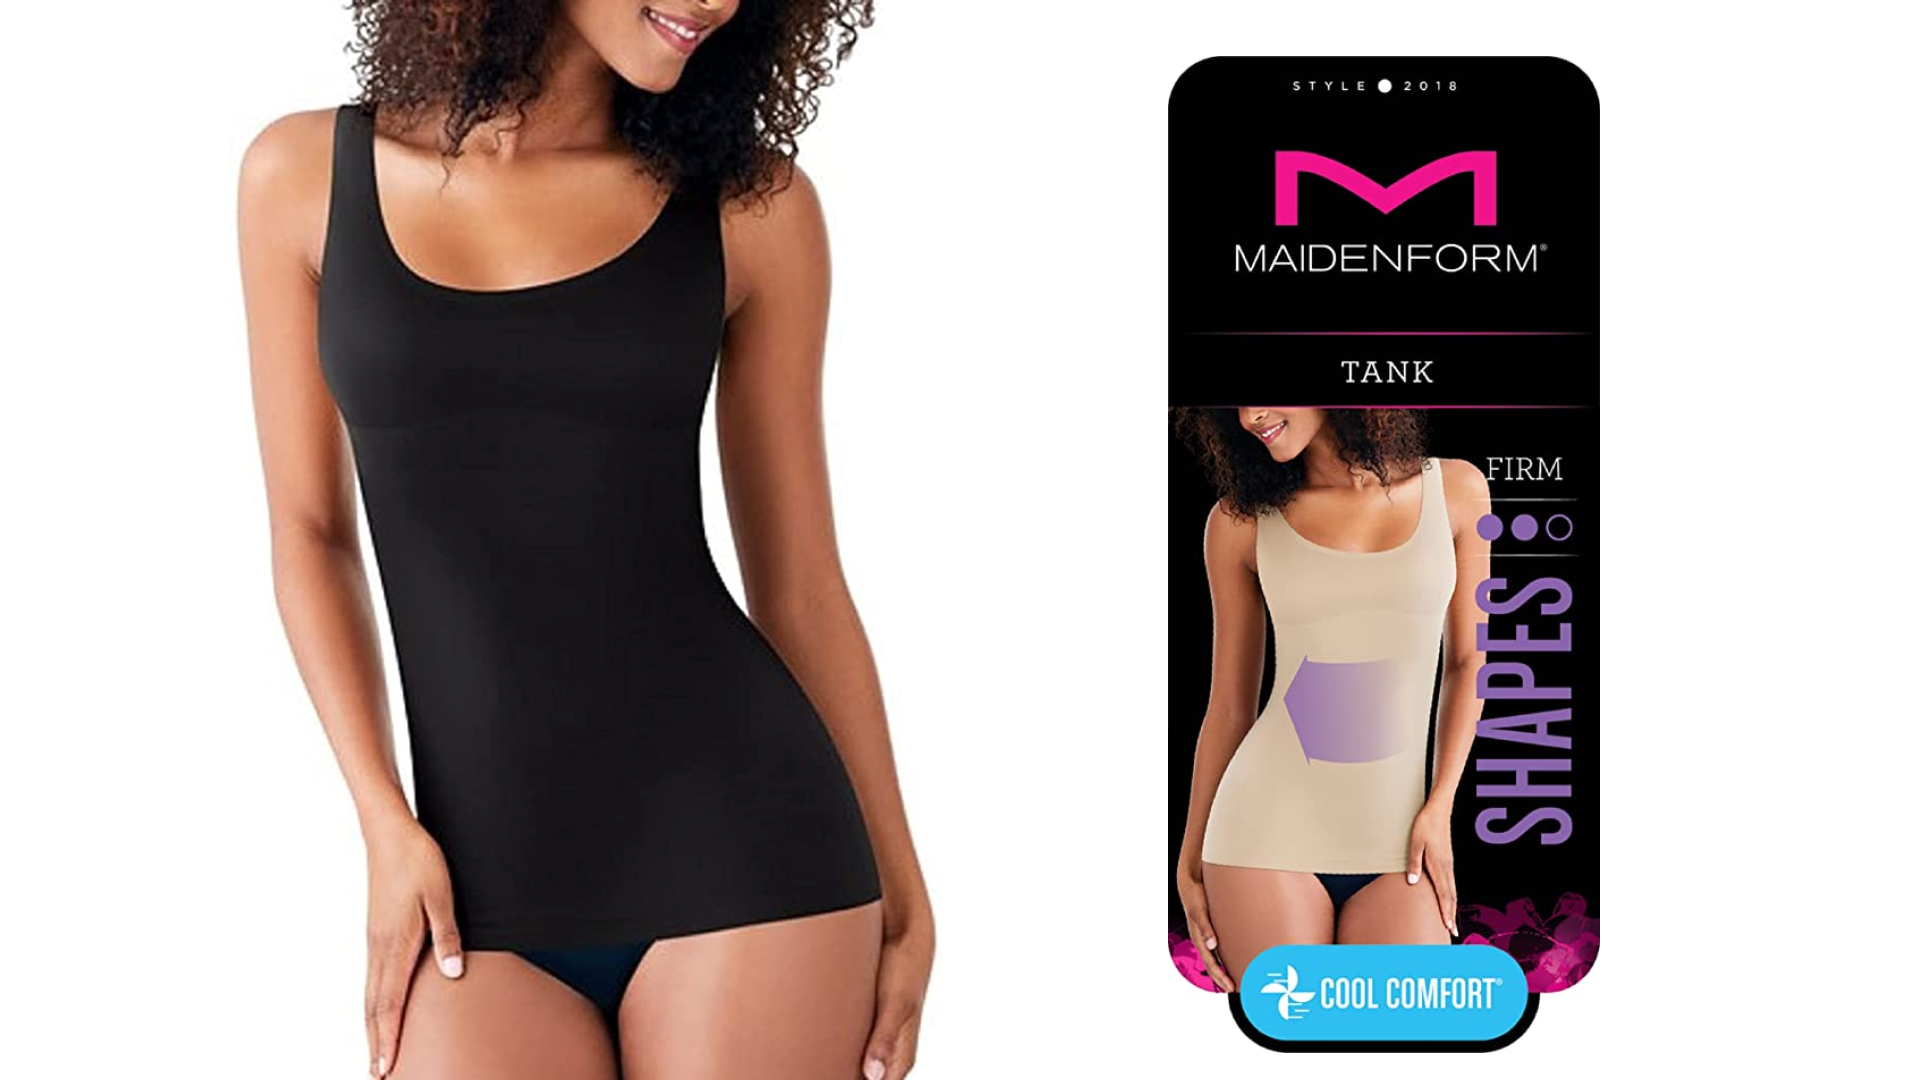 KNIX tan nude shape wear adjustable straps size large bodysuit